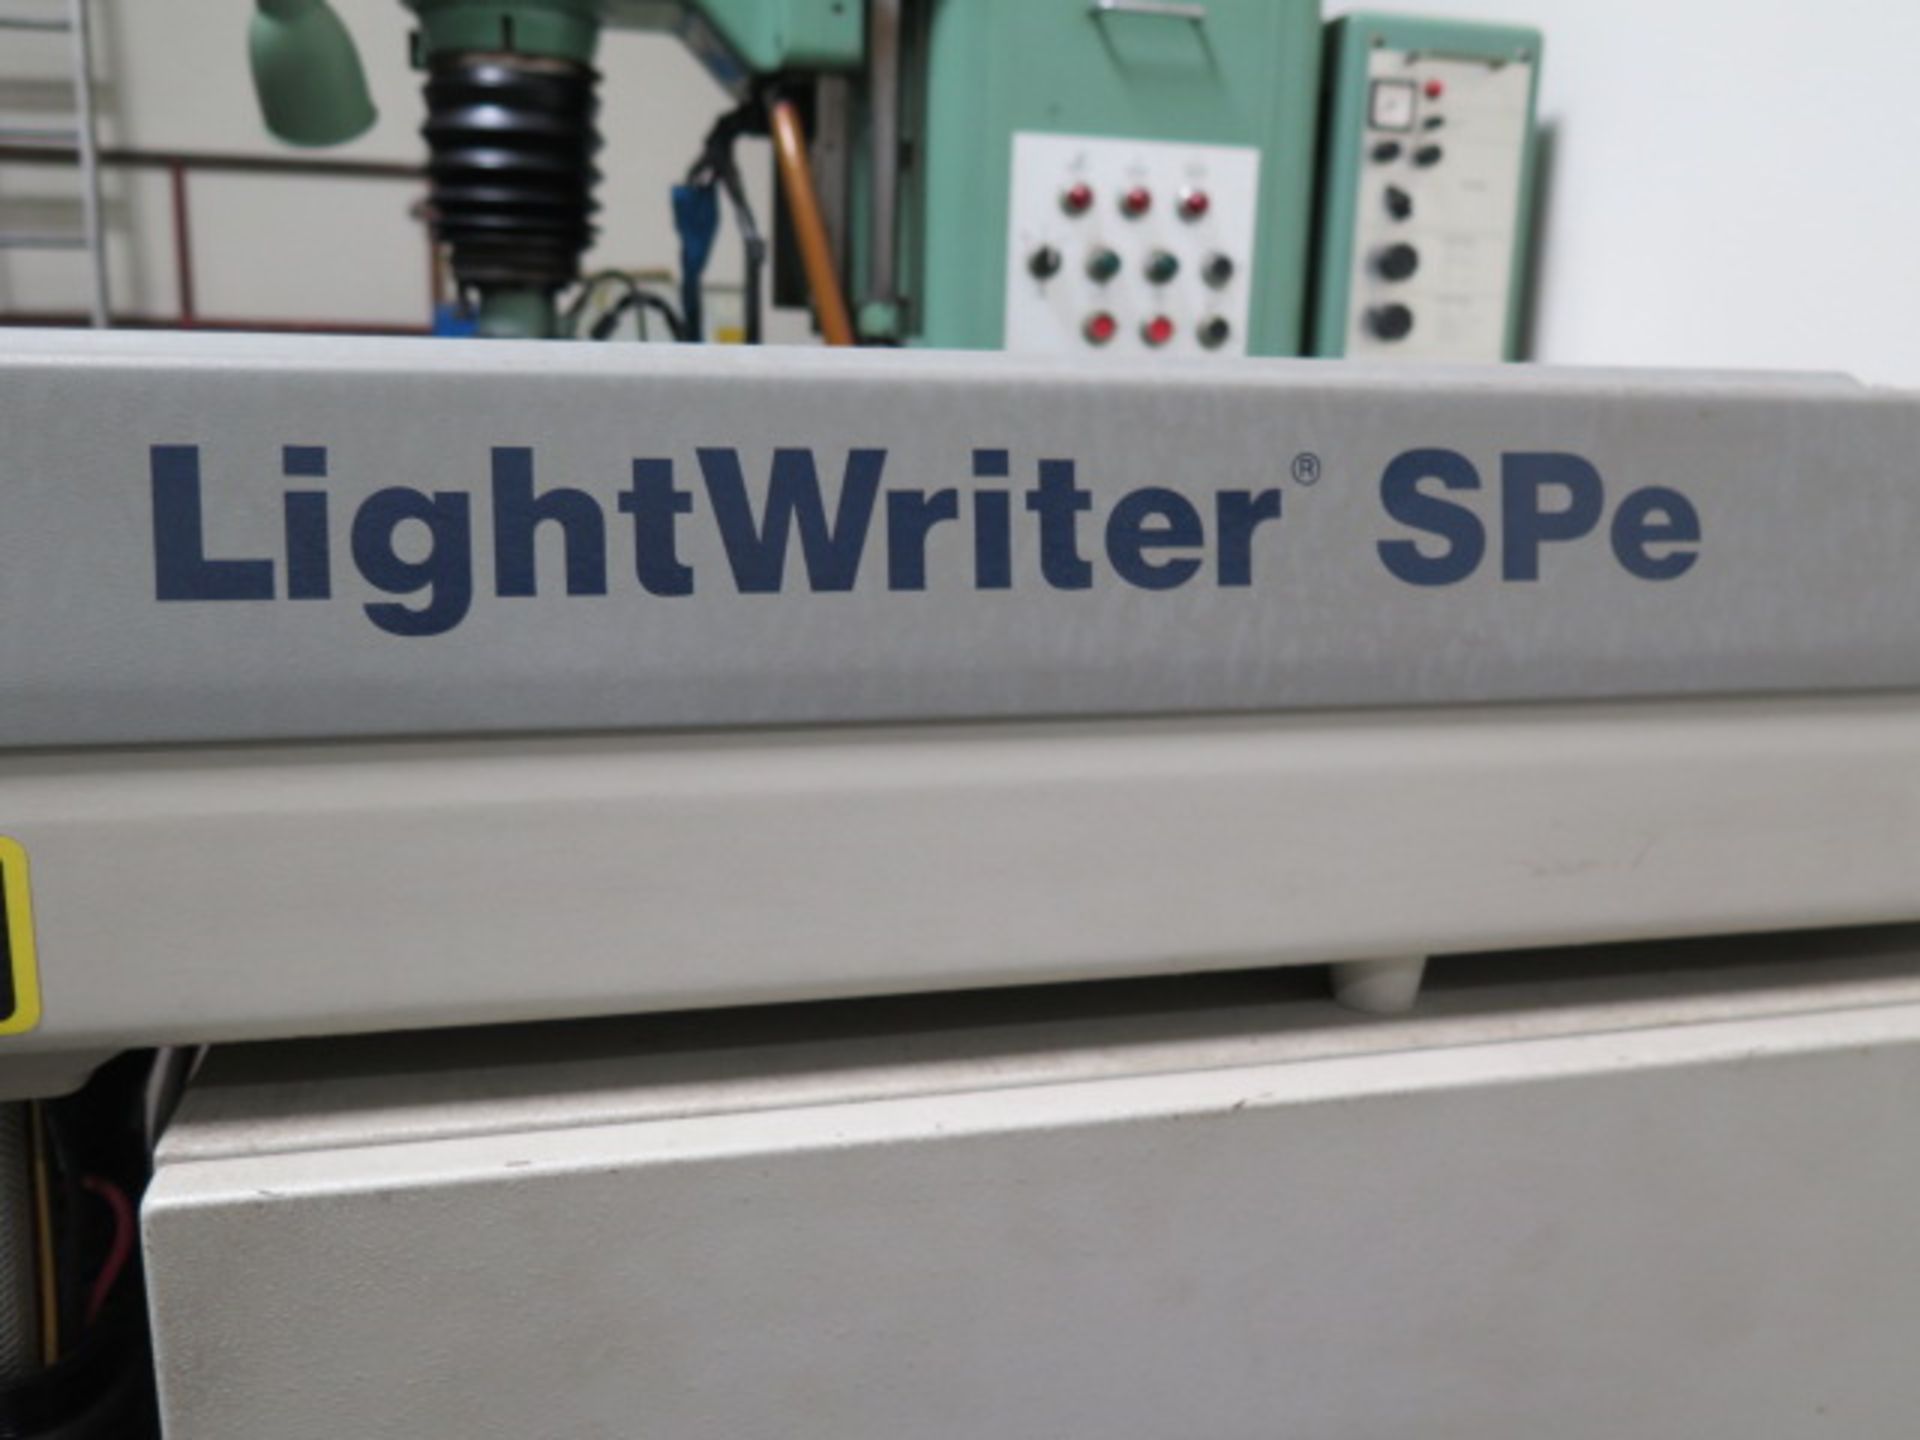 Lumonics "Light Writer Spe" Laser Engraving System w/ Lumonics Controls (SOLD AS-IS - NO WARRANTY) - Image 4 of 8